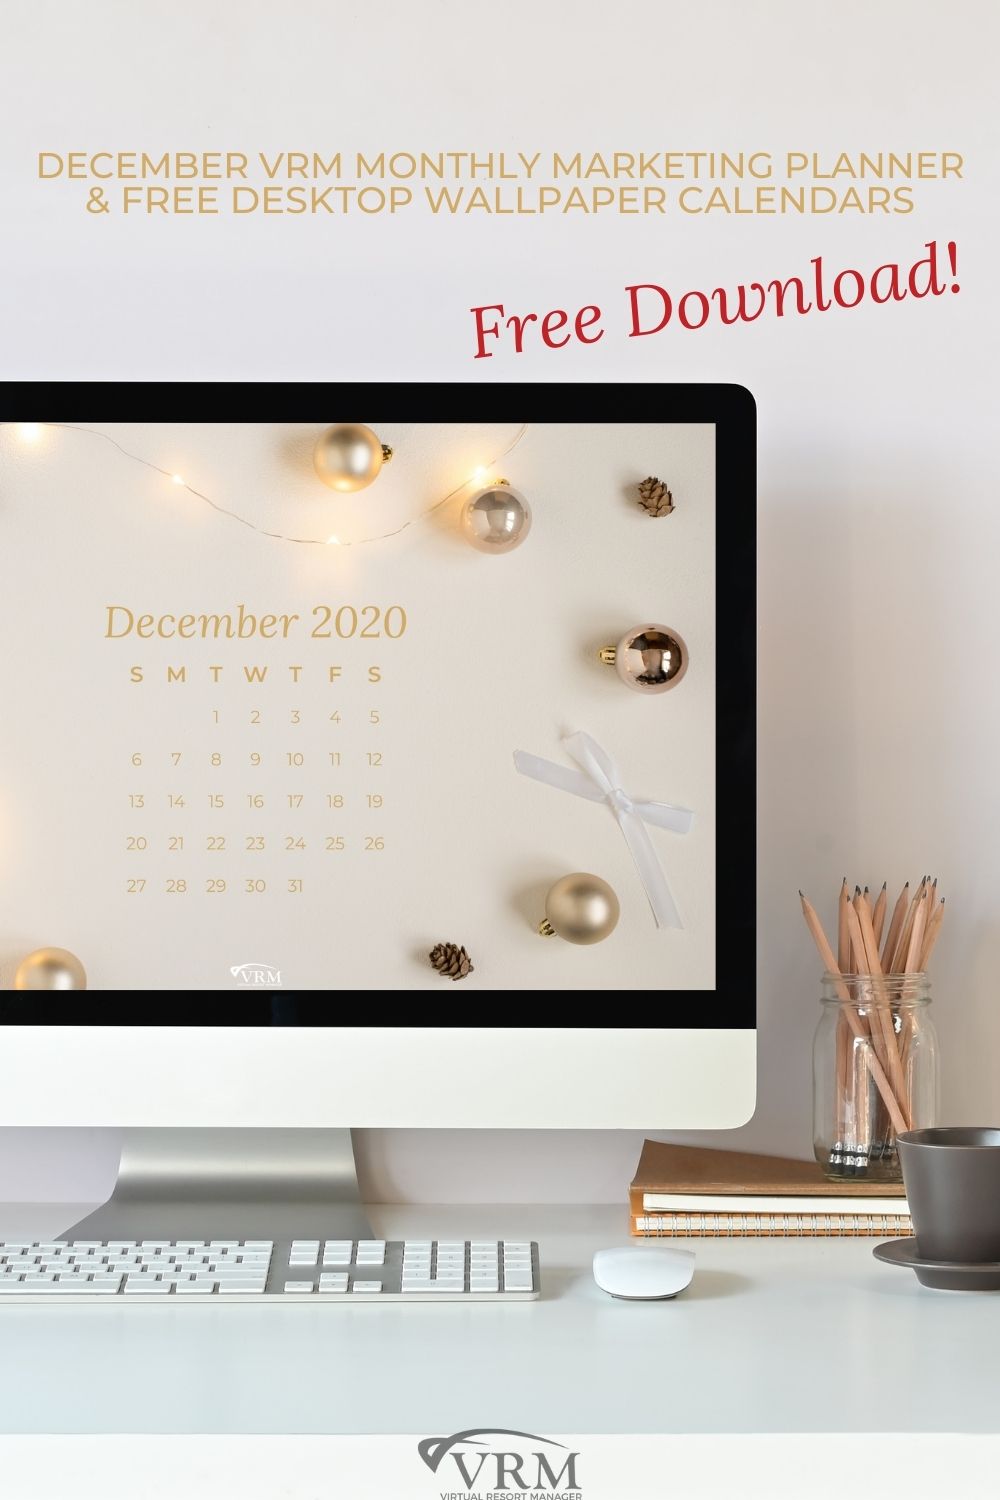 December VRM Monthly Marketing Planner and Free Desktop Wallpaper Calendars Pinterest